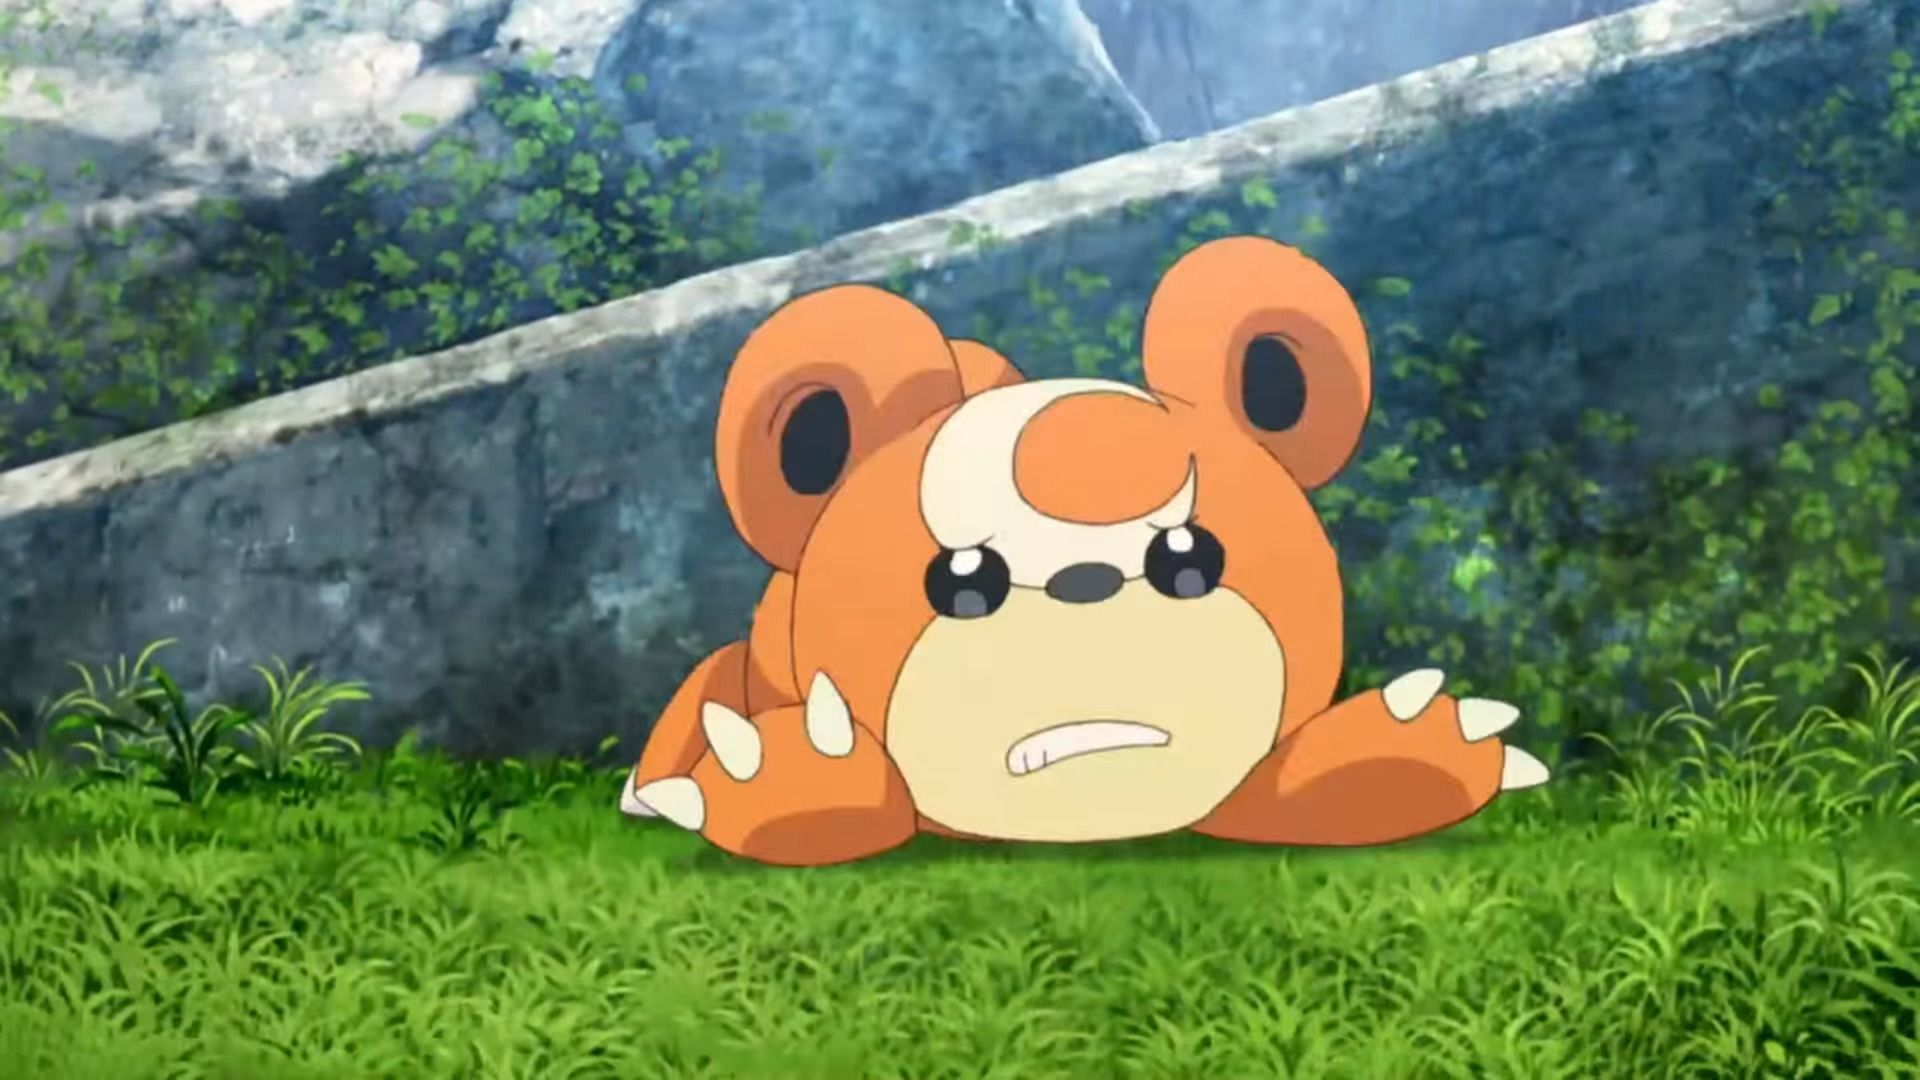 Teddiursa as it appears in the anime (Image via The Pokemon Company)